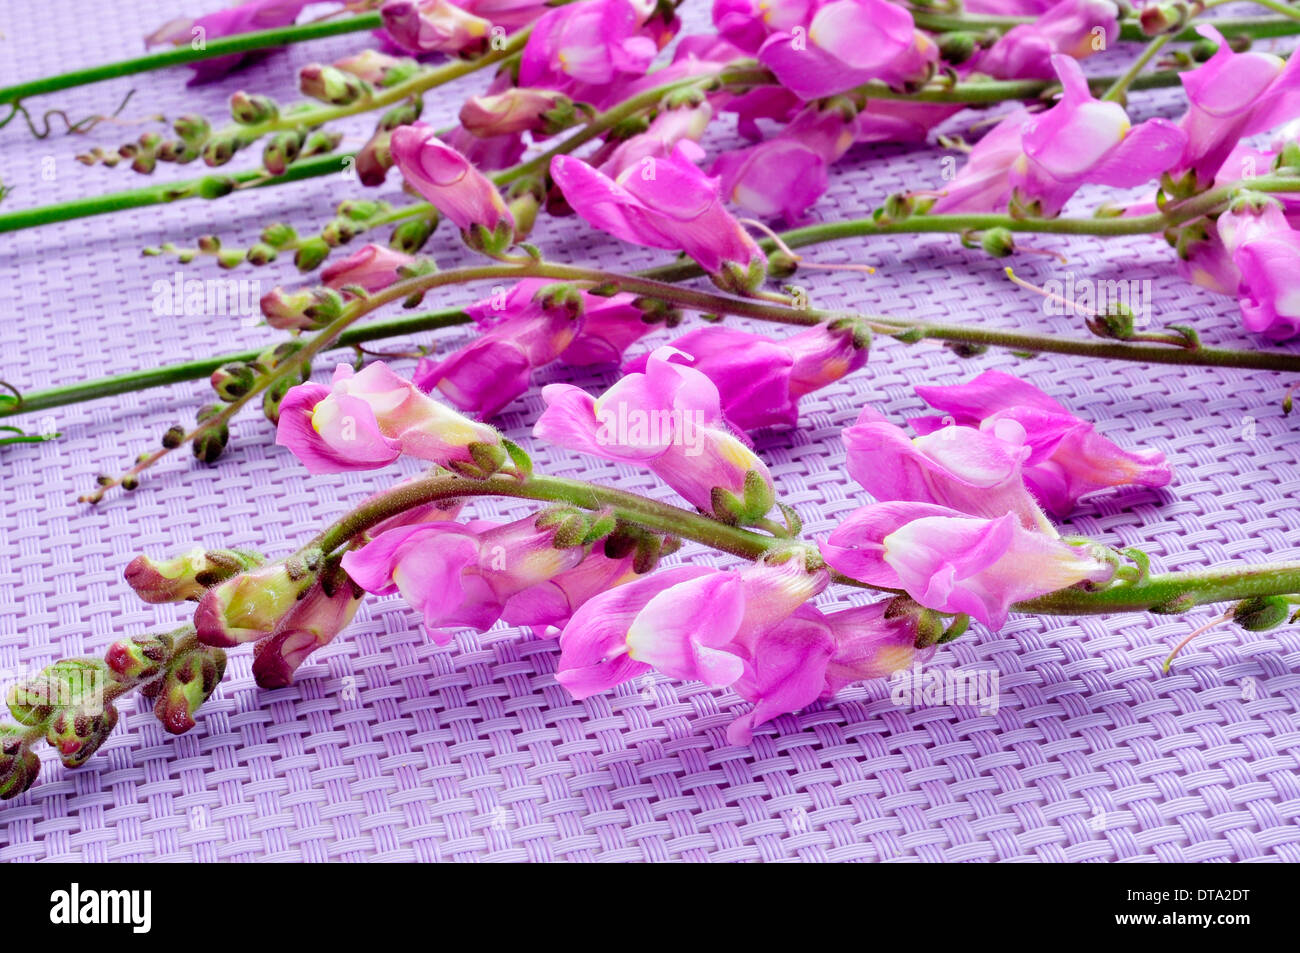 some violet snapdragon flowers on a violet background Stock Photo